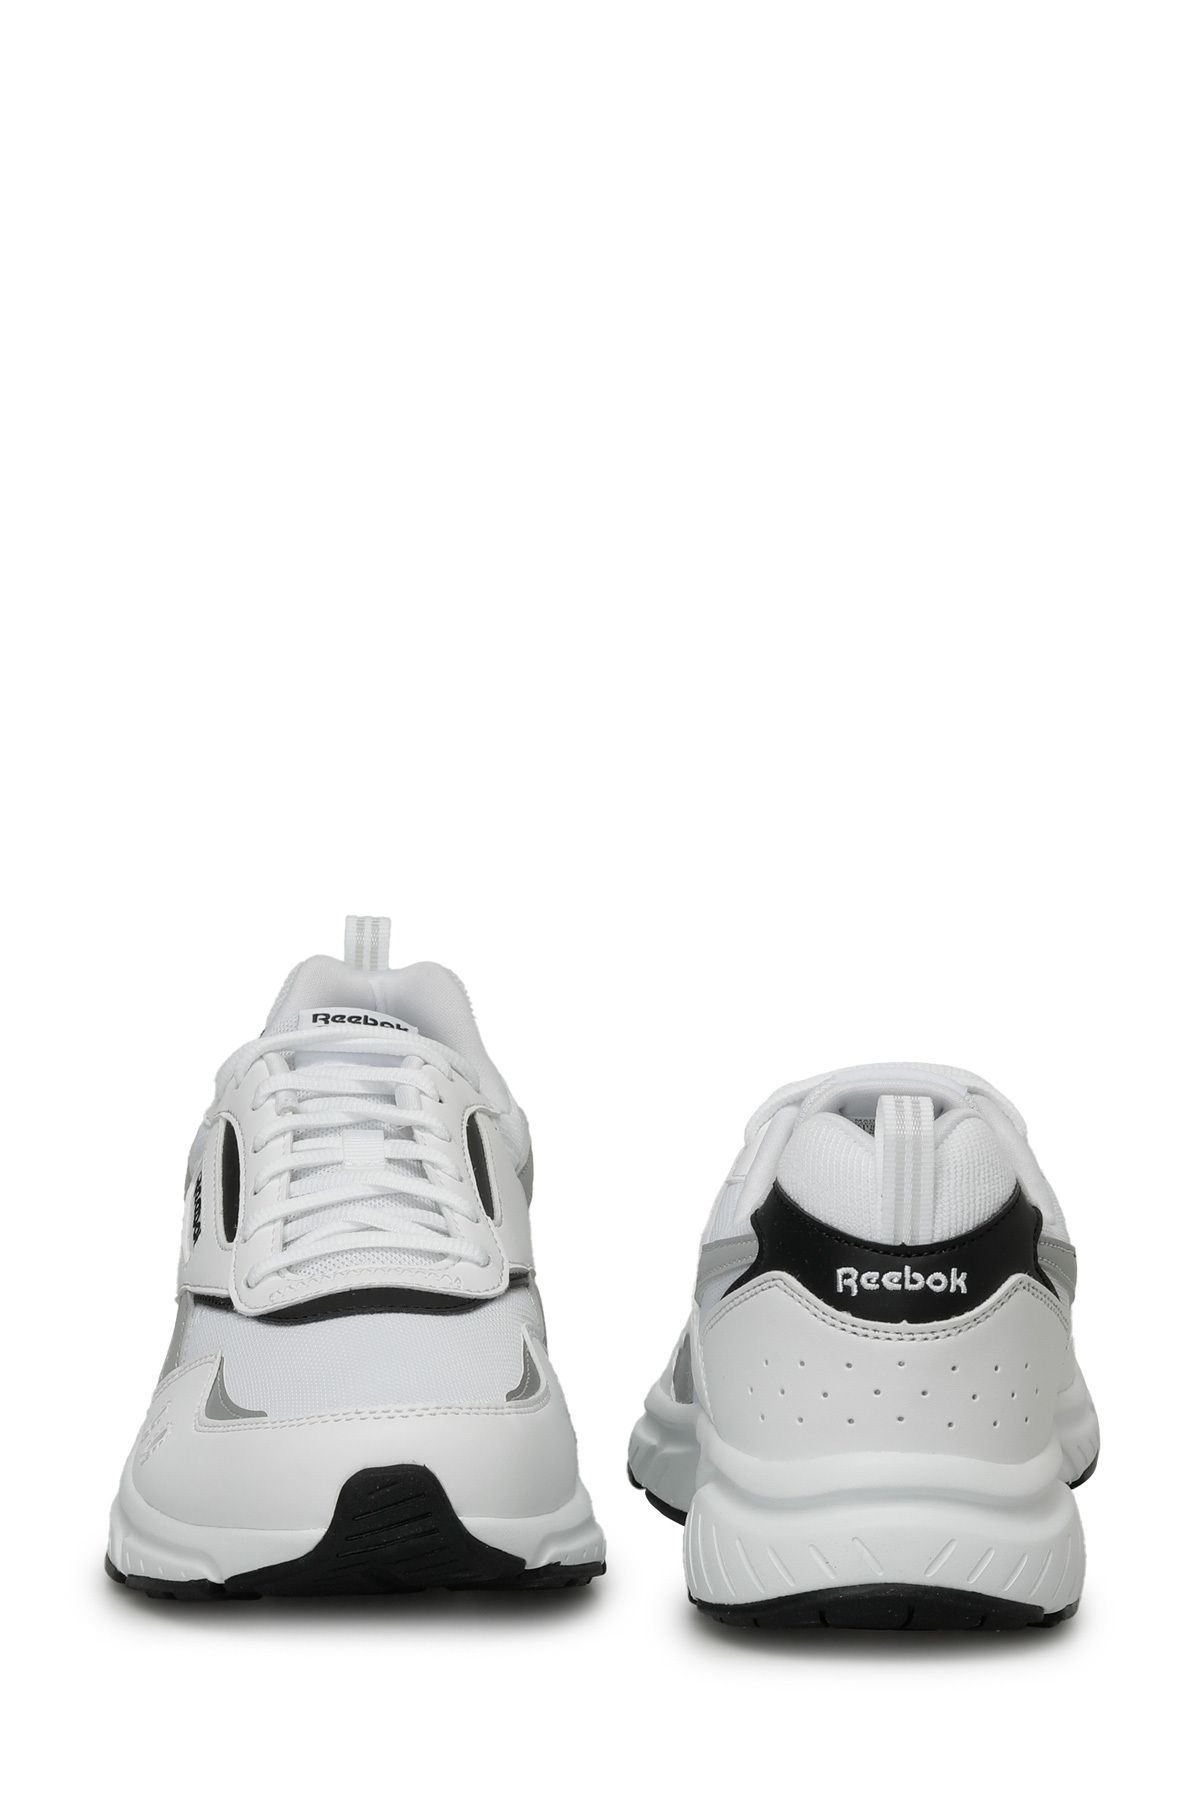 Reebok Royal Hyperium 3 کفش ورزشی یونیسکس سفید